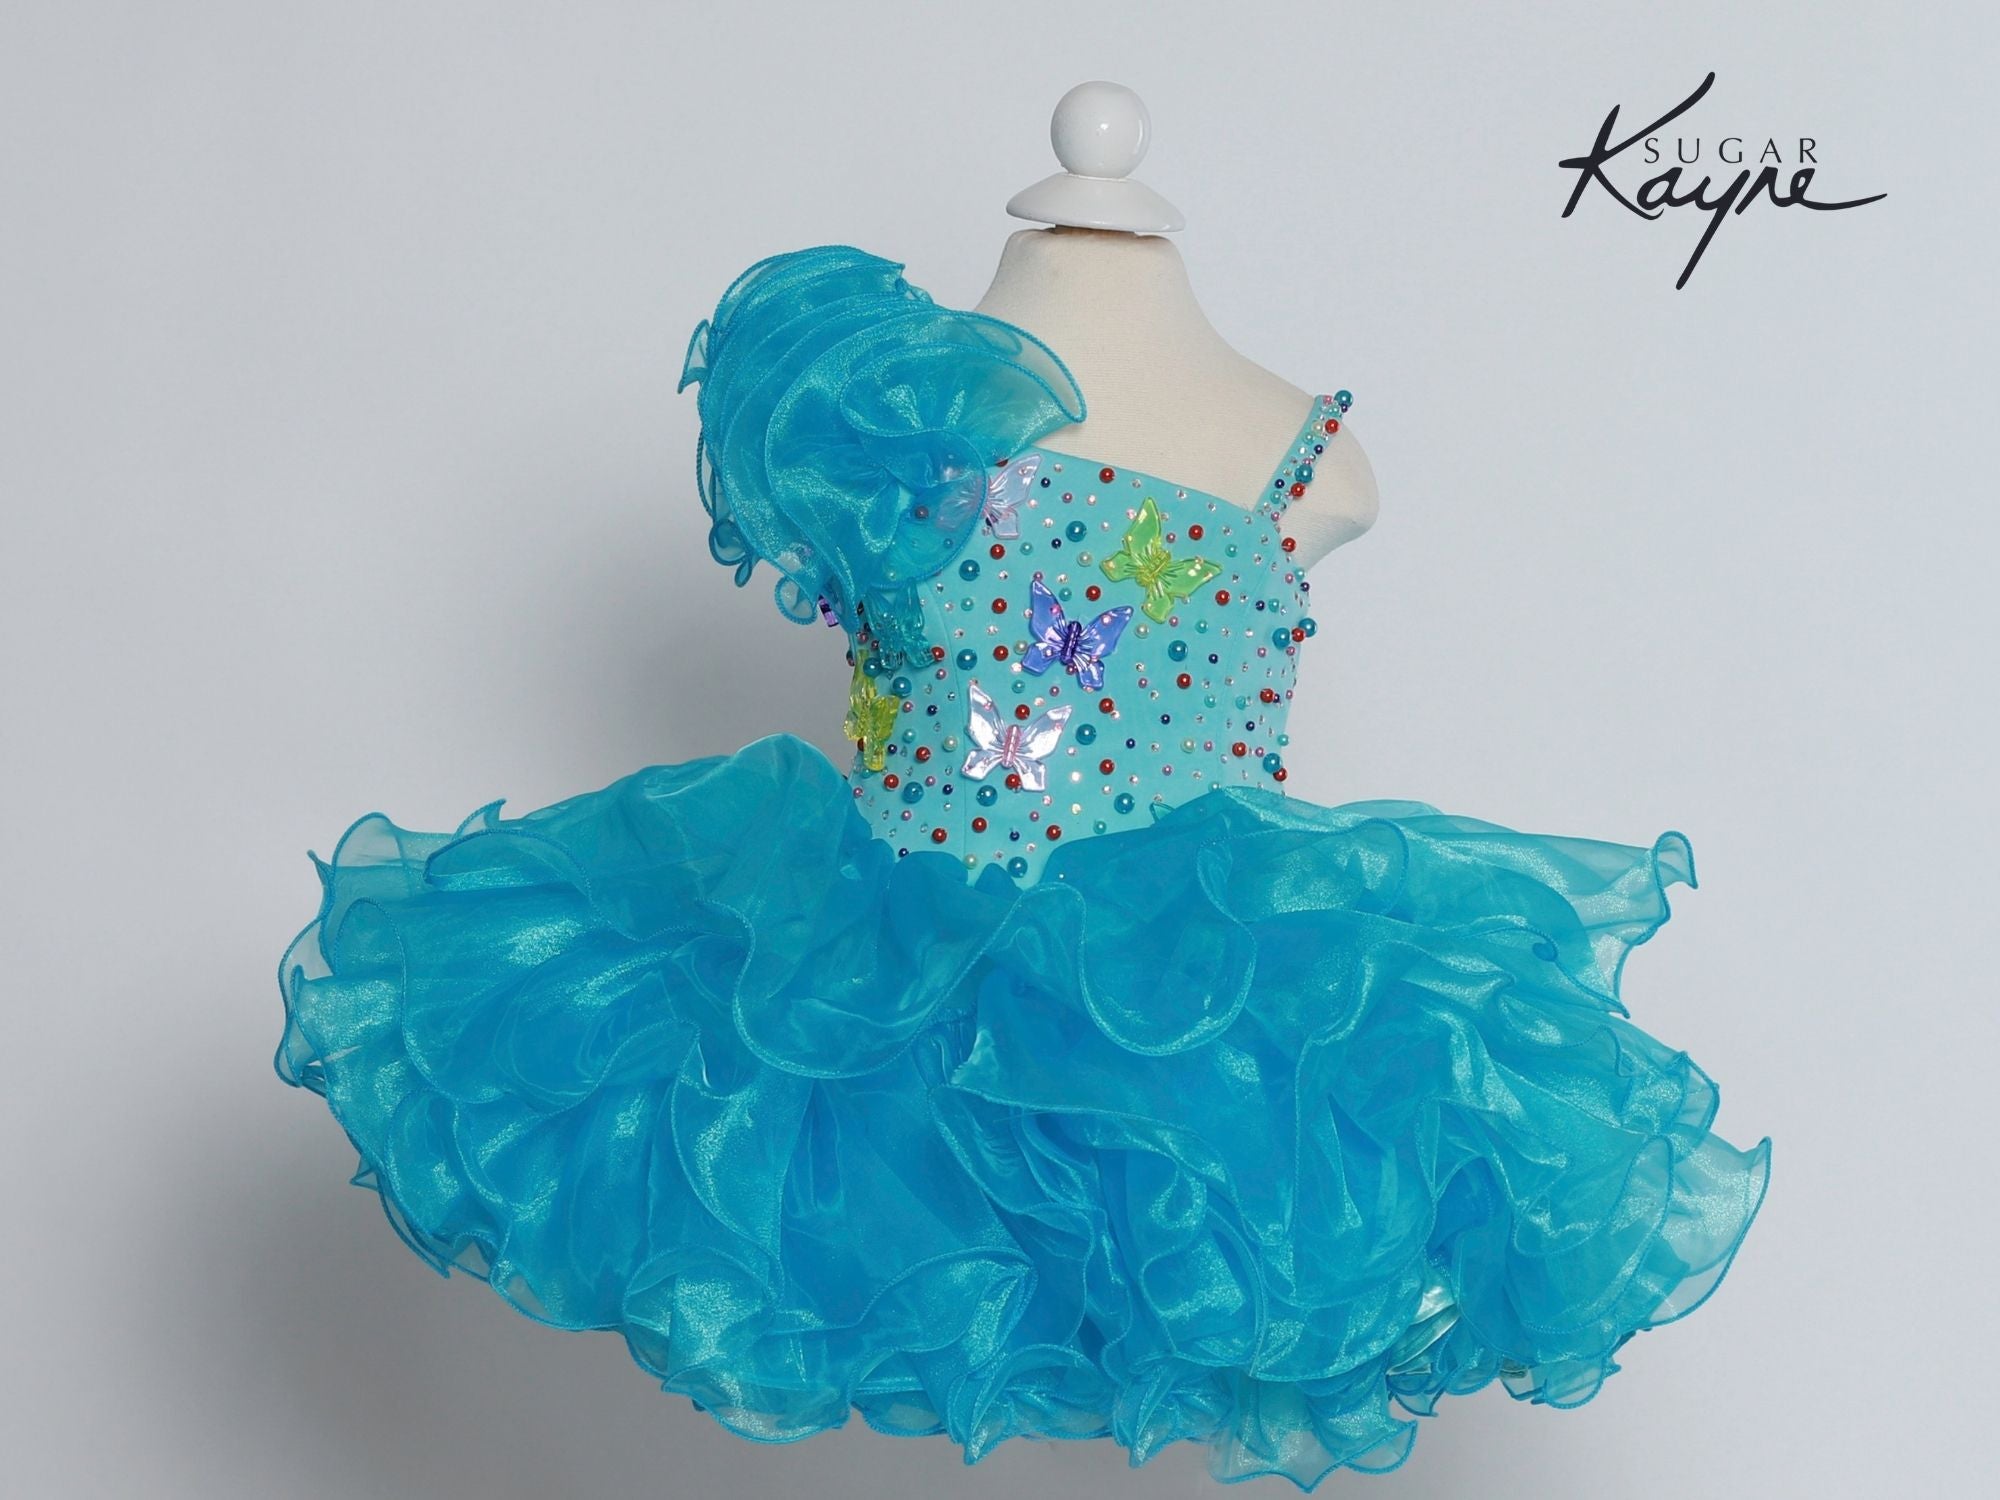 Sugar Kayne FashionistaPageant Party Cupcake Ruffled One Shoulder Dress